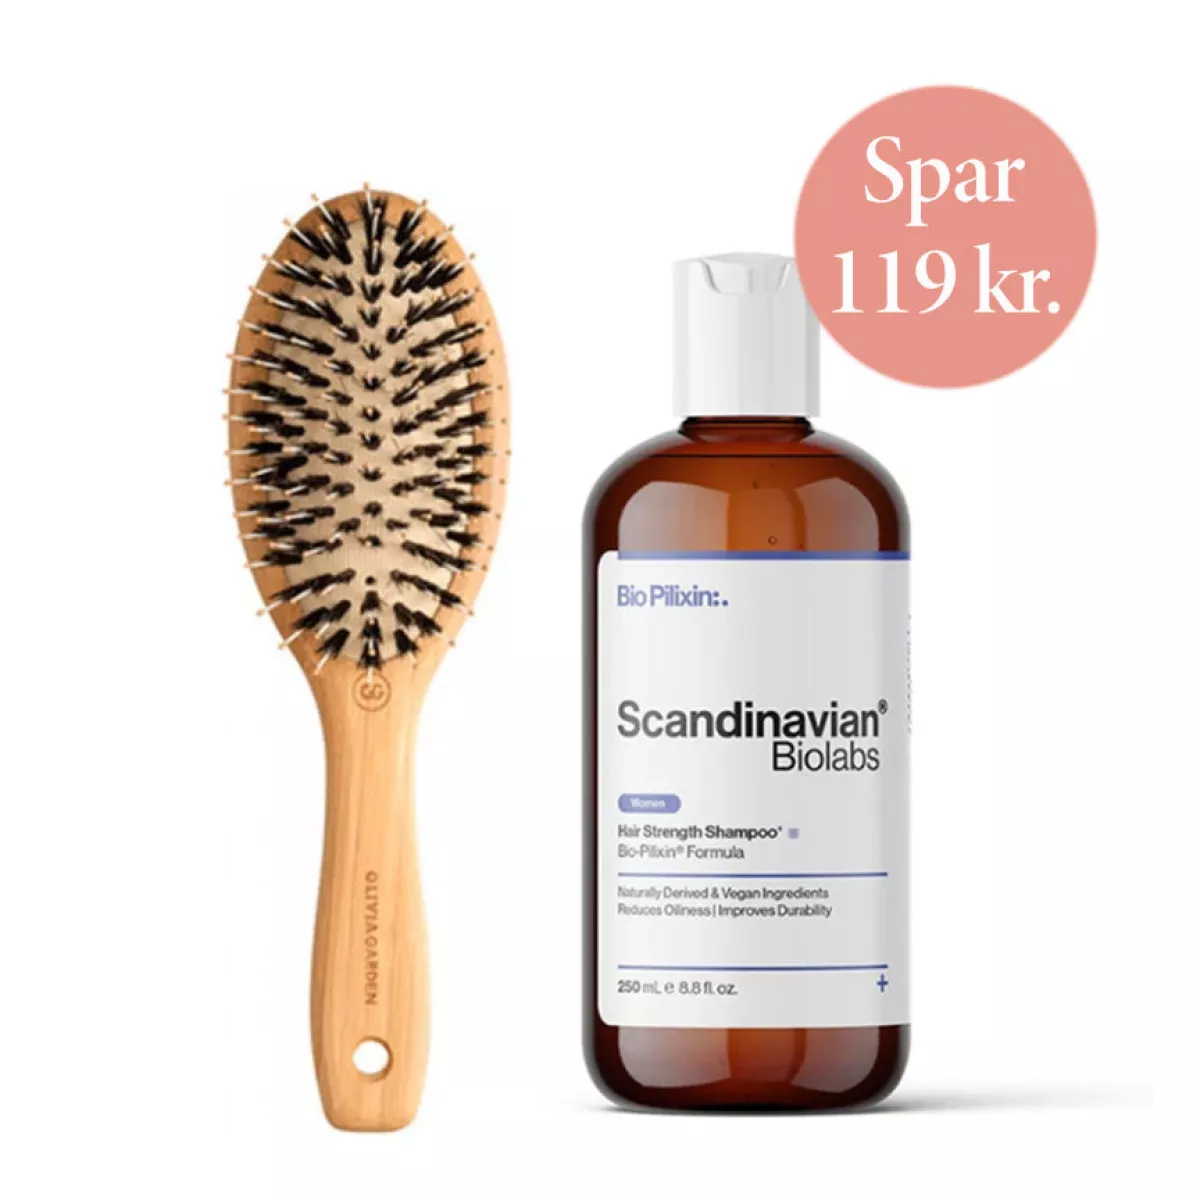 #1 - Bio-PilixinÂ® Hair Strength Shampoo+ | For Women, 250 ml.